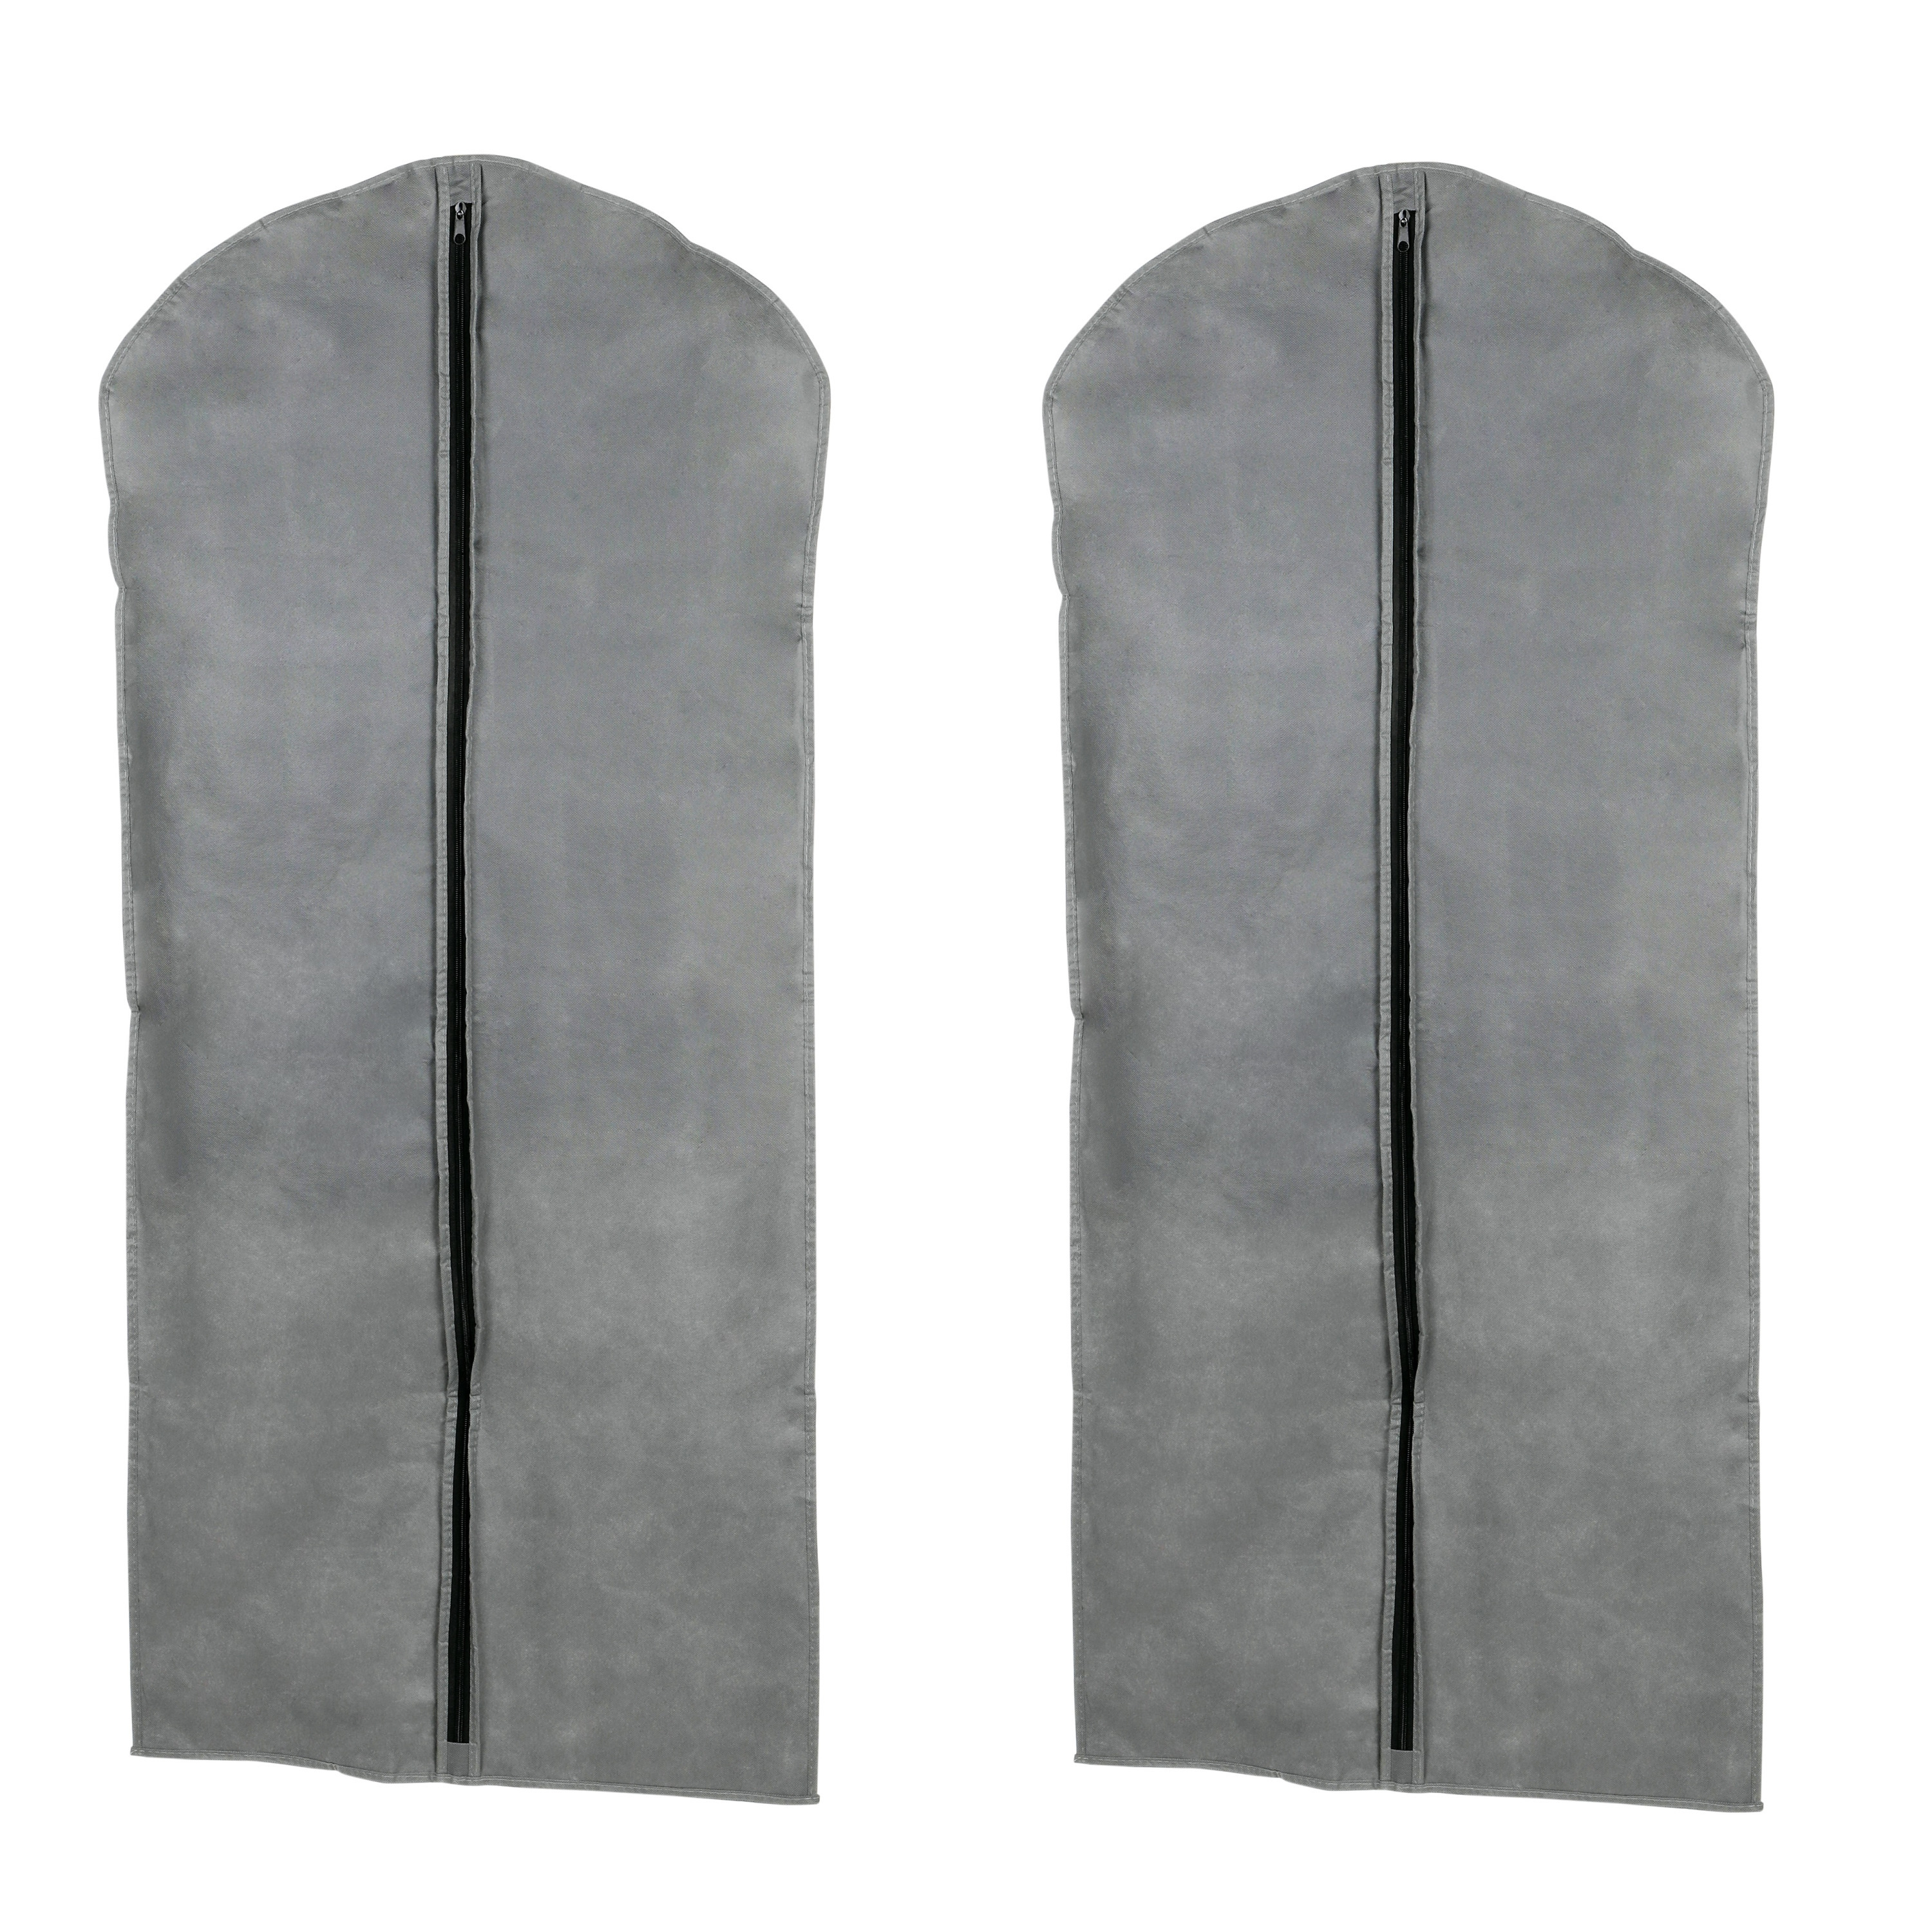 Set van 6x stuks grijze kledinghoes 60 x 137 cm